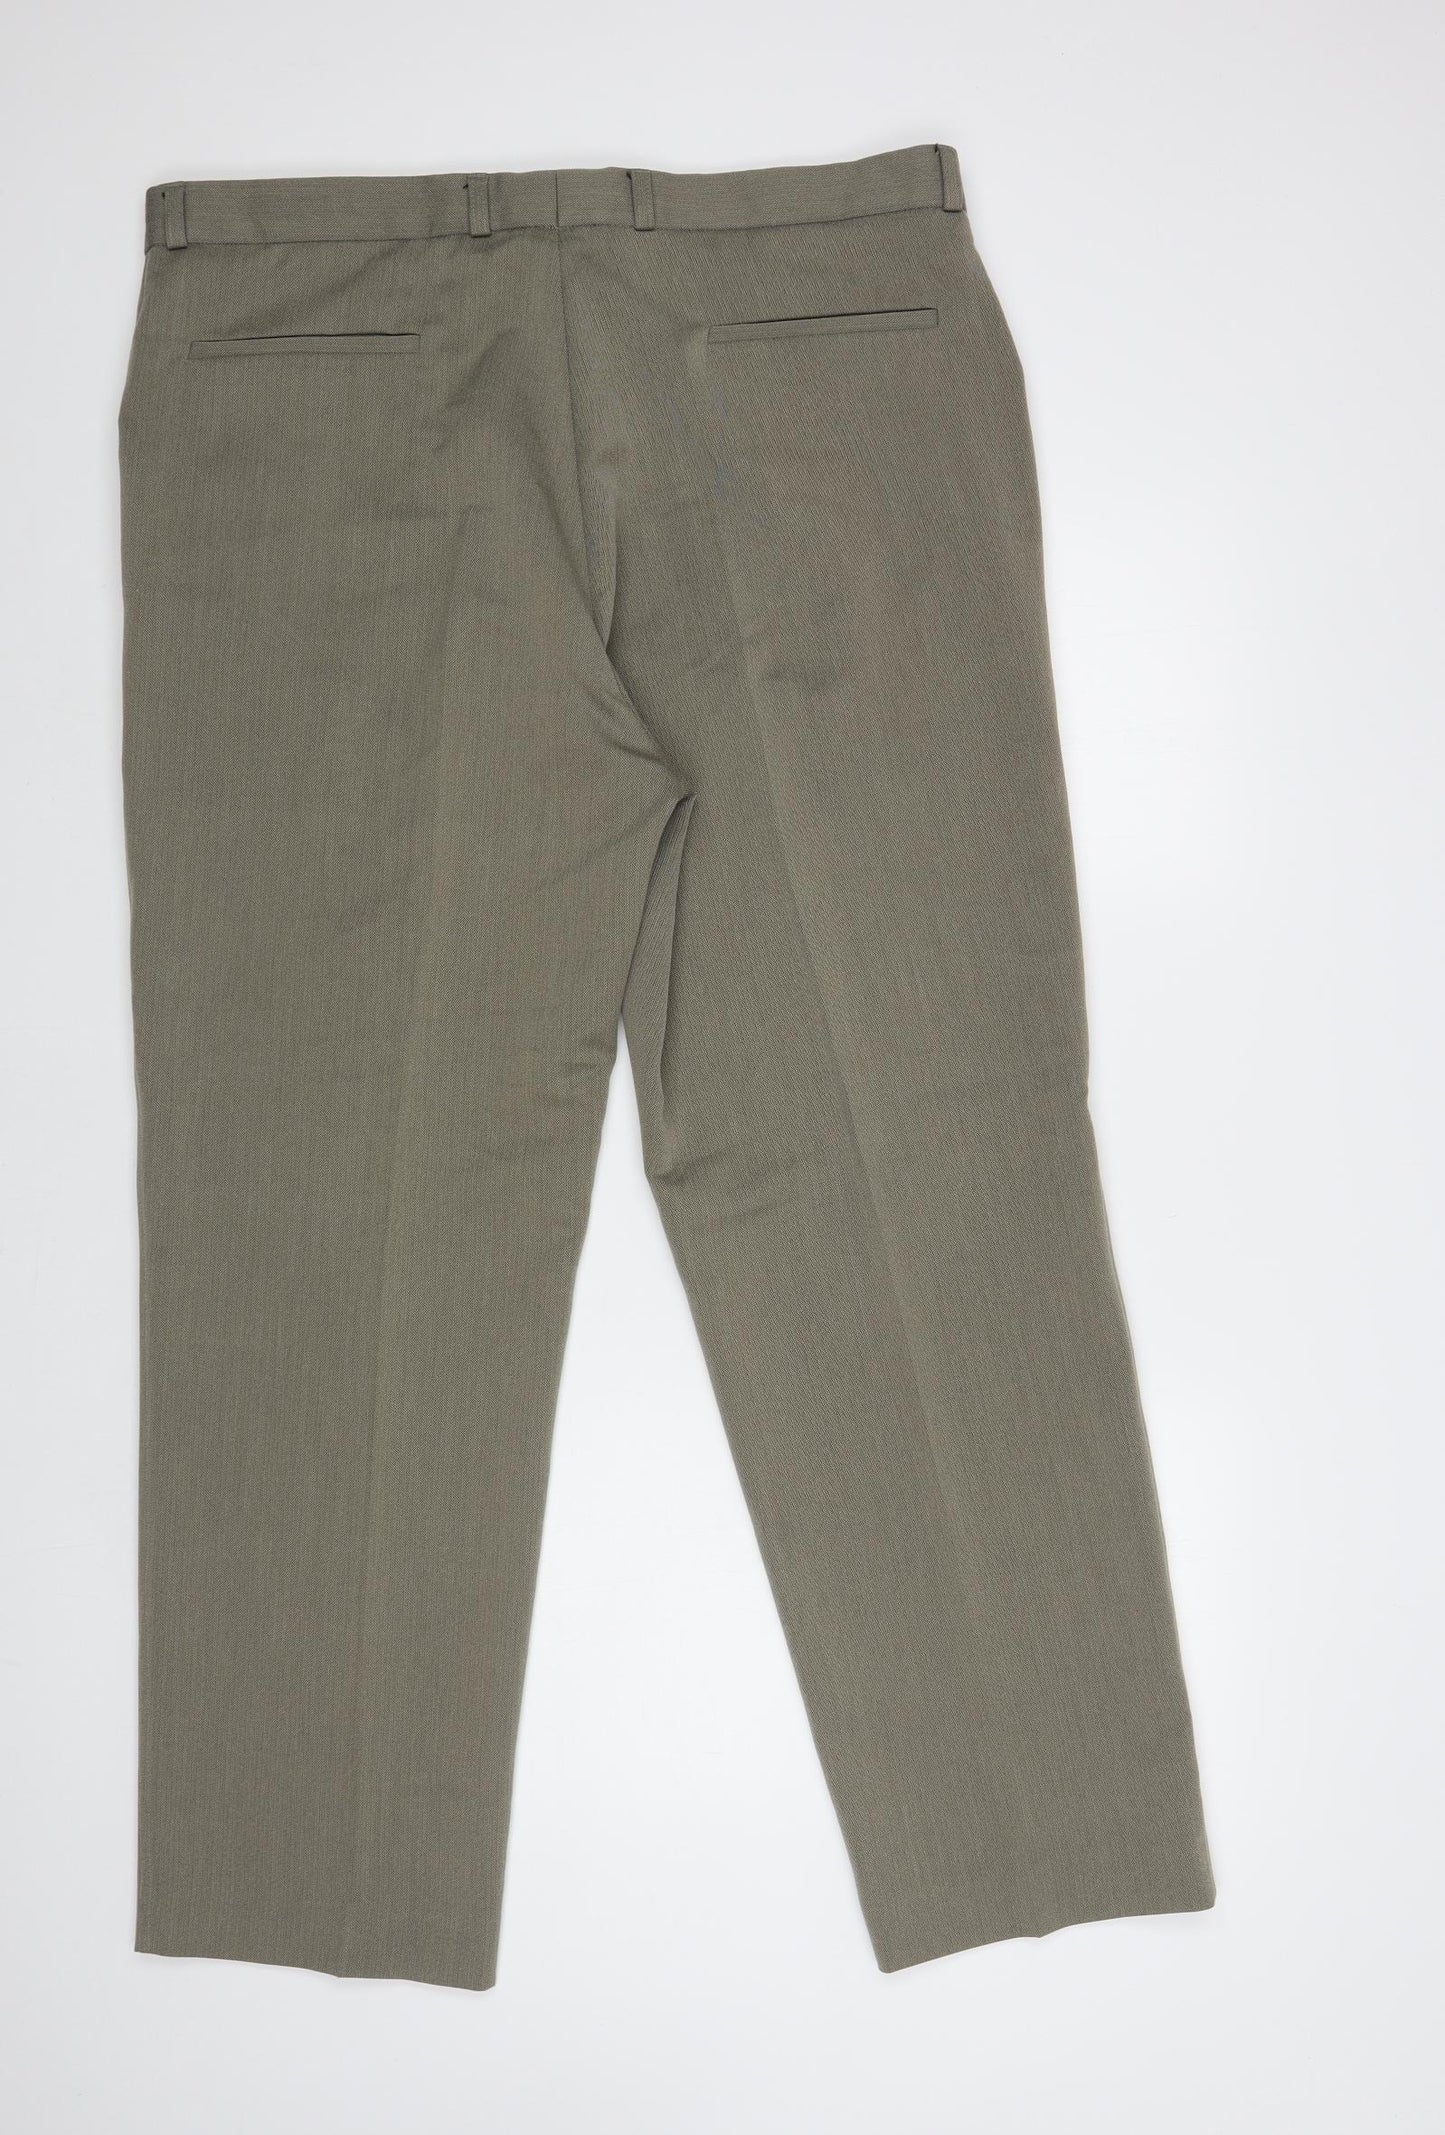 Denver Mens Grey Polyester Dress Pants Trousers Size 40 in L31 in Regular Hook & Loop